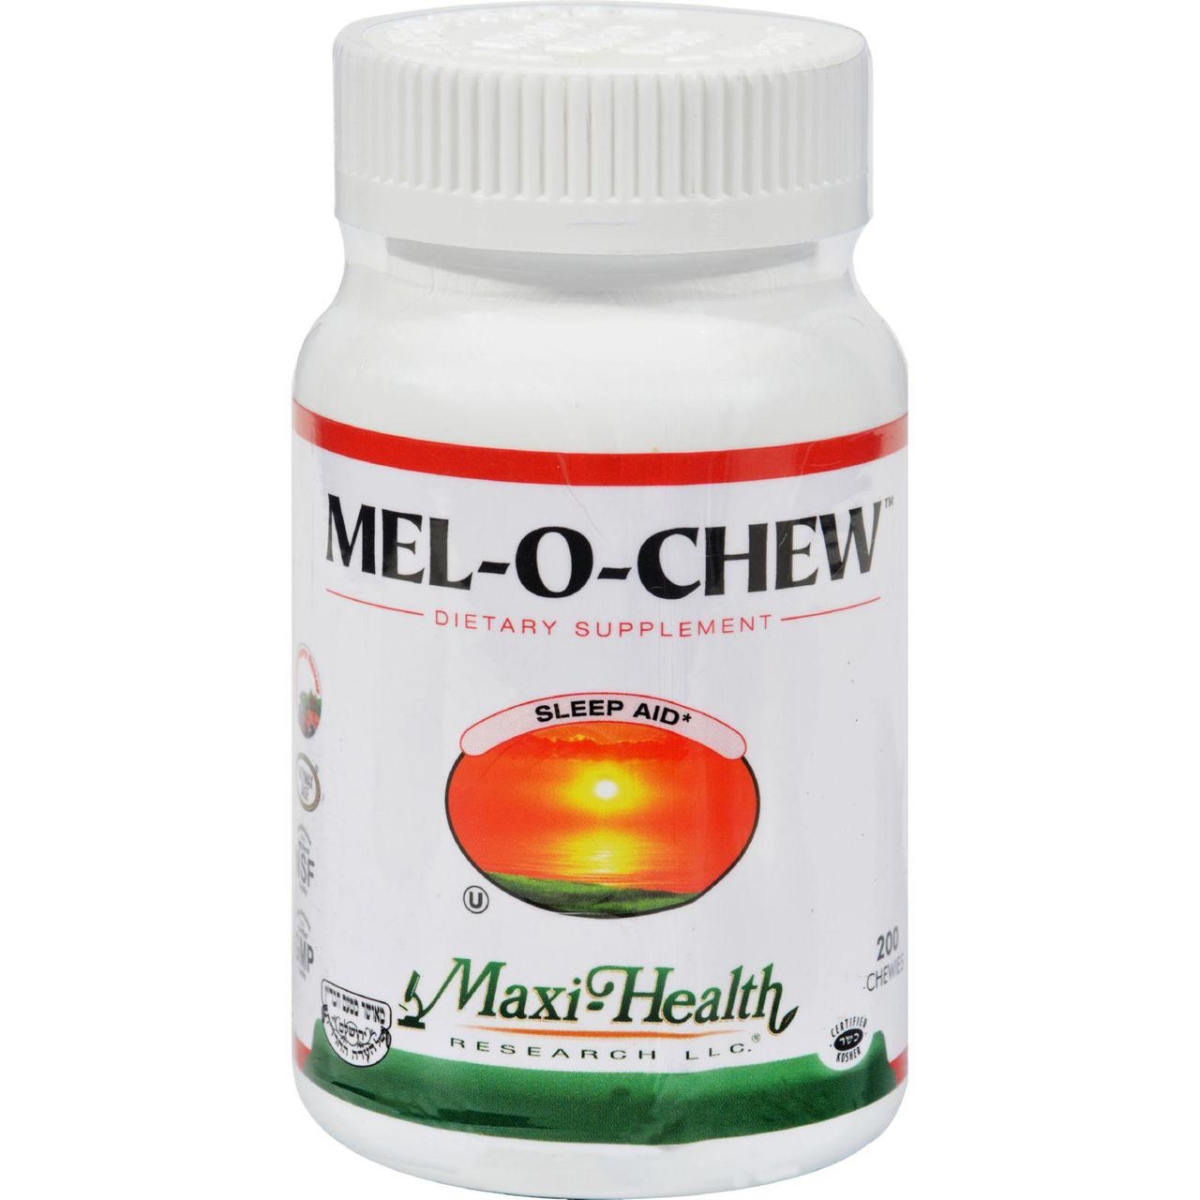 Picture of Maxi Health Kosher Vitamins HG1089887 Maxi Health Mel-o-chew - 200 Tablets